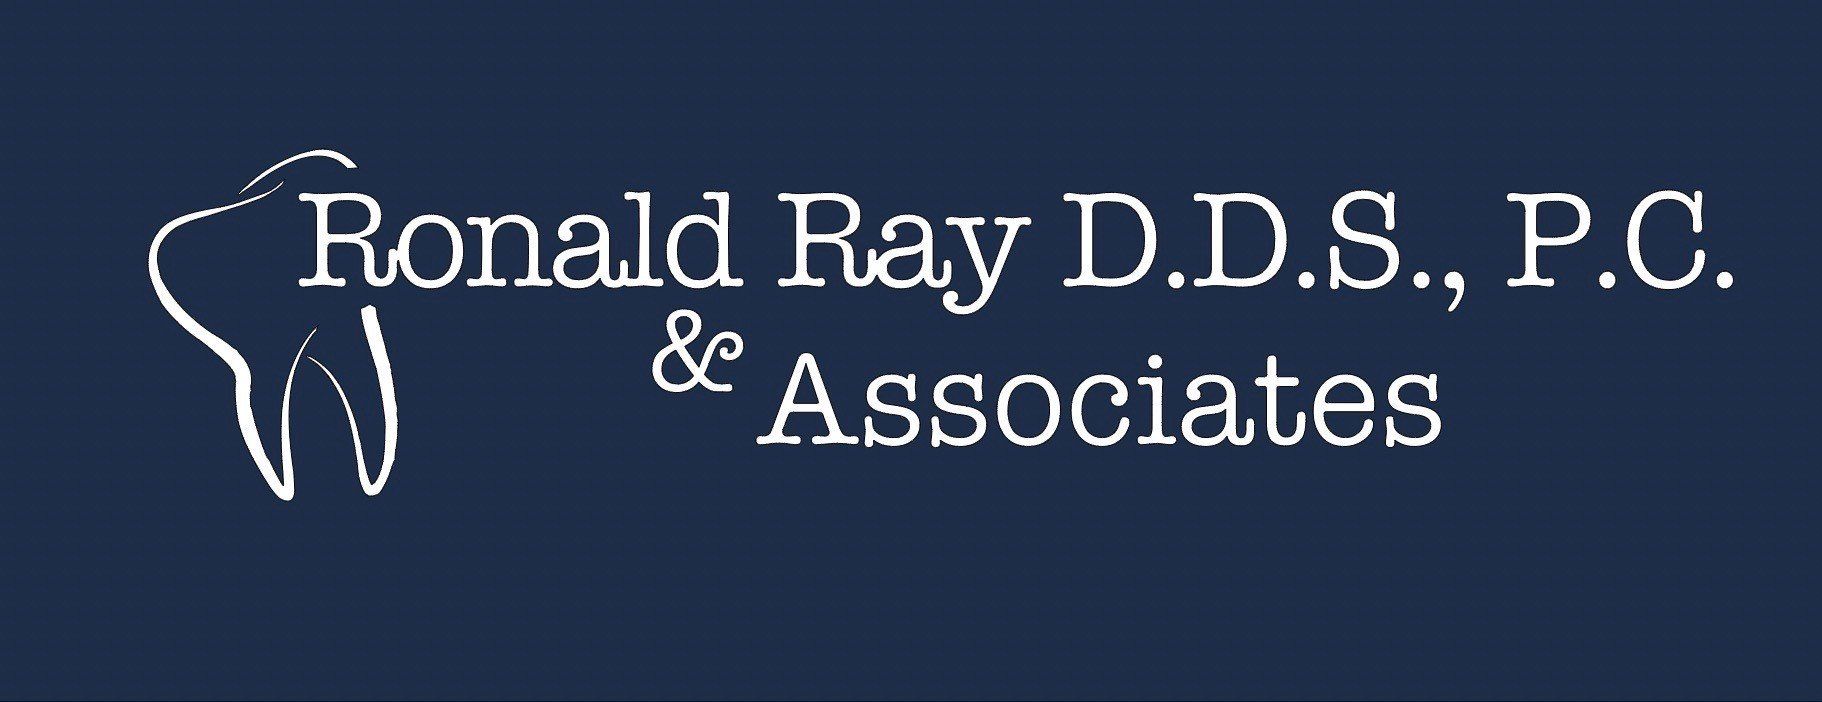 Ronald Ray D.D.S. P.C. & Associates